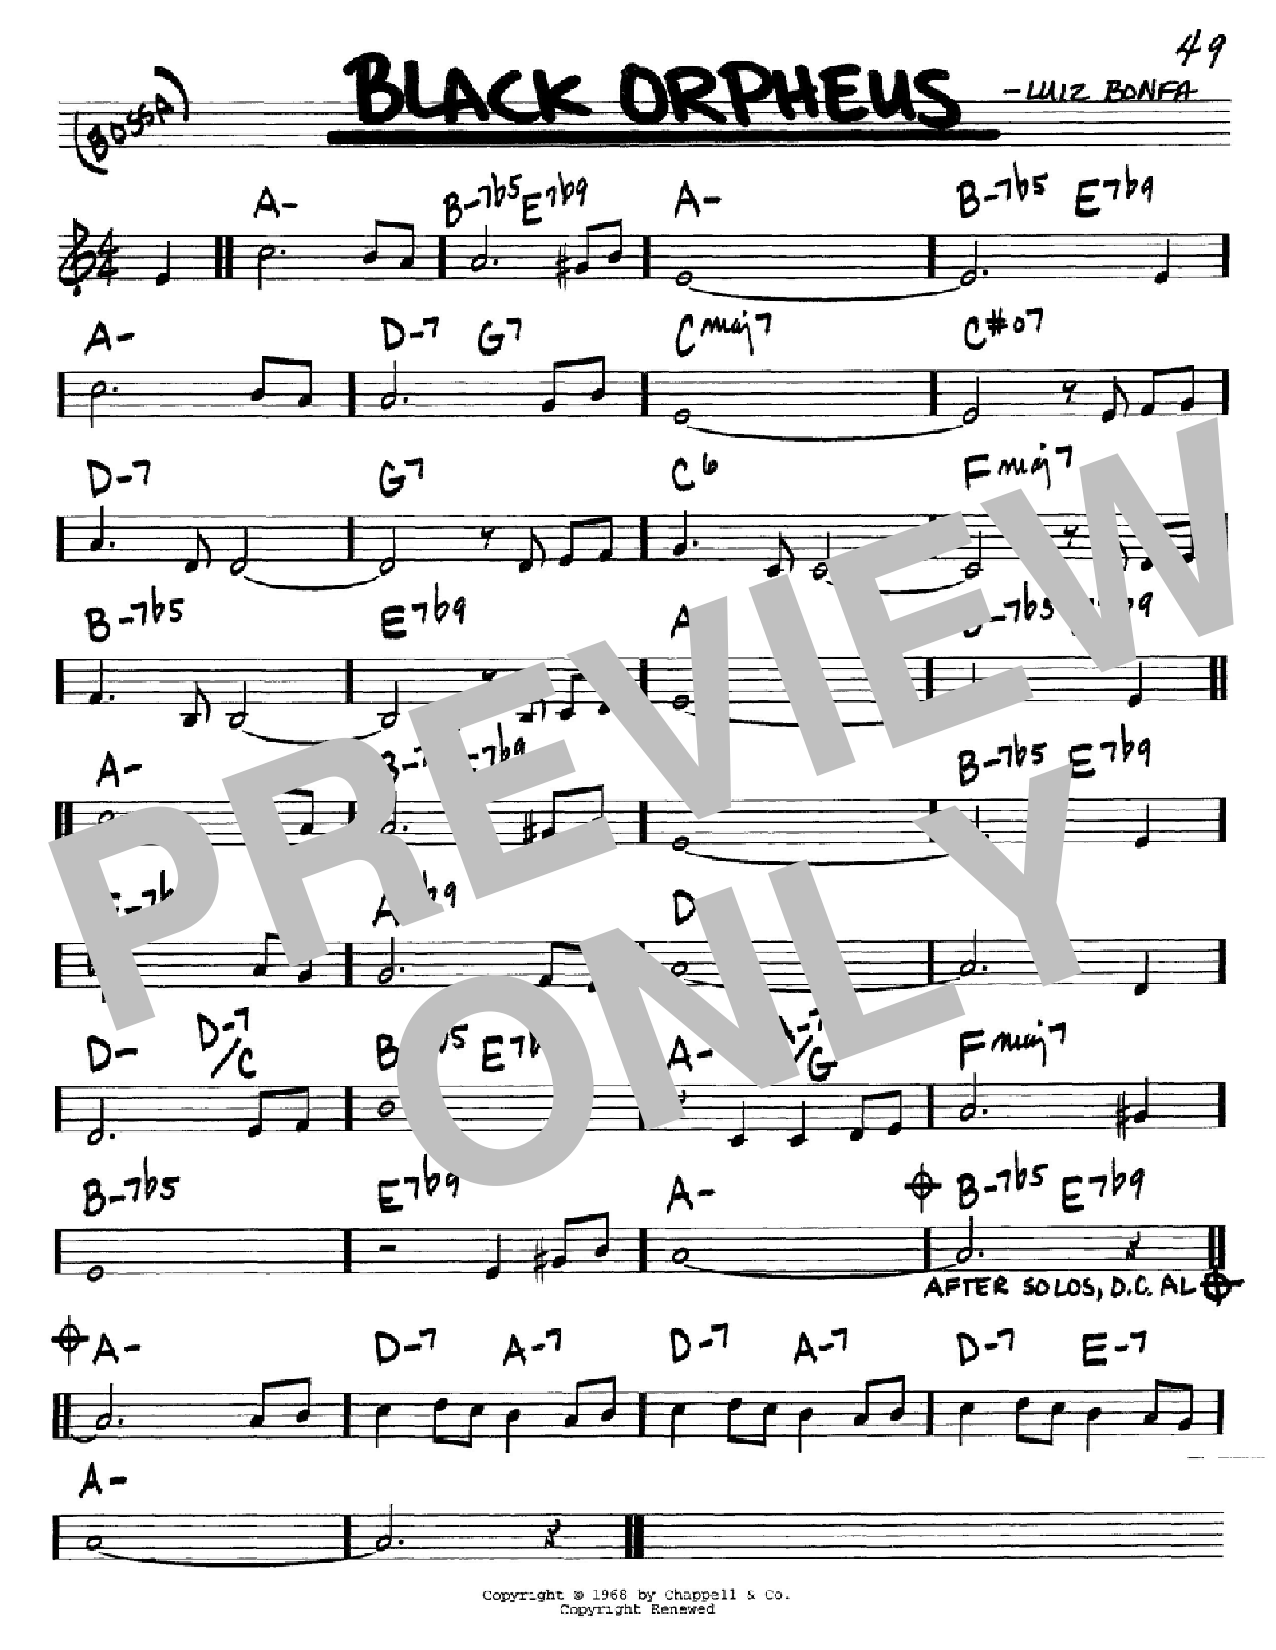 Luiz Bonfa Black Orpheus Sheet Music Notes & Chords for Real Book – Melody & Chords - Download or Print PDF